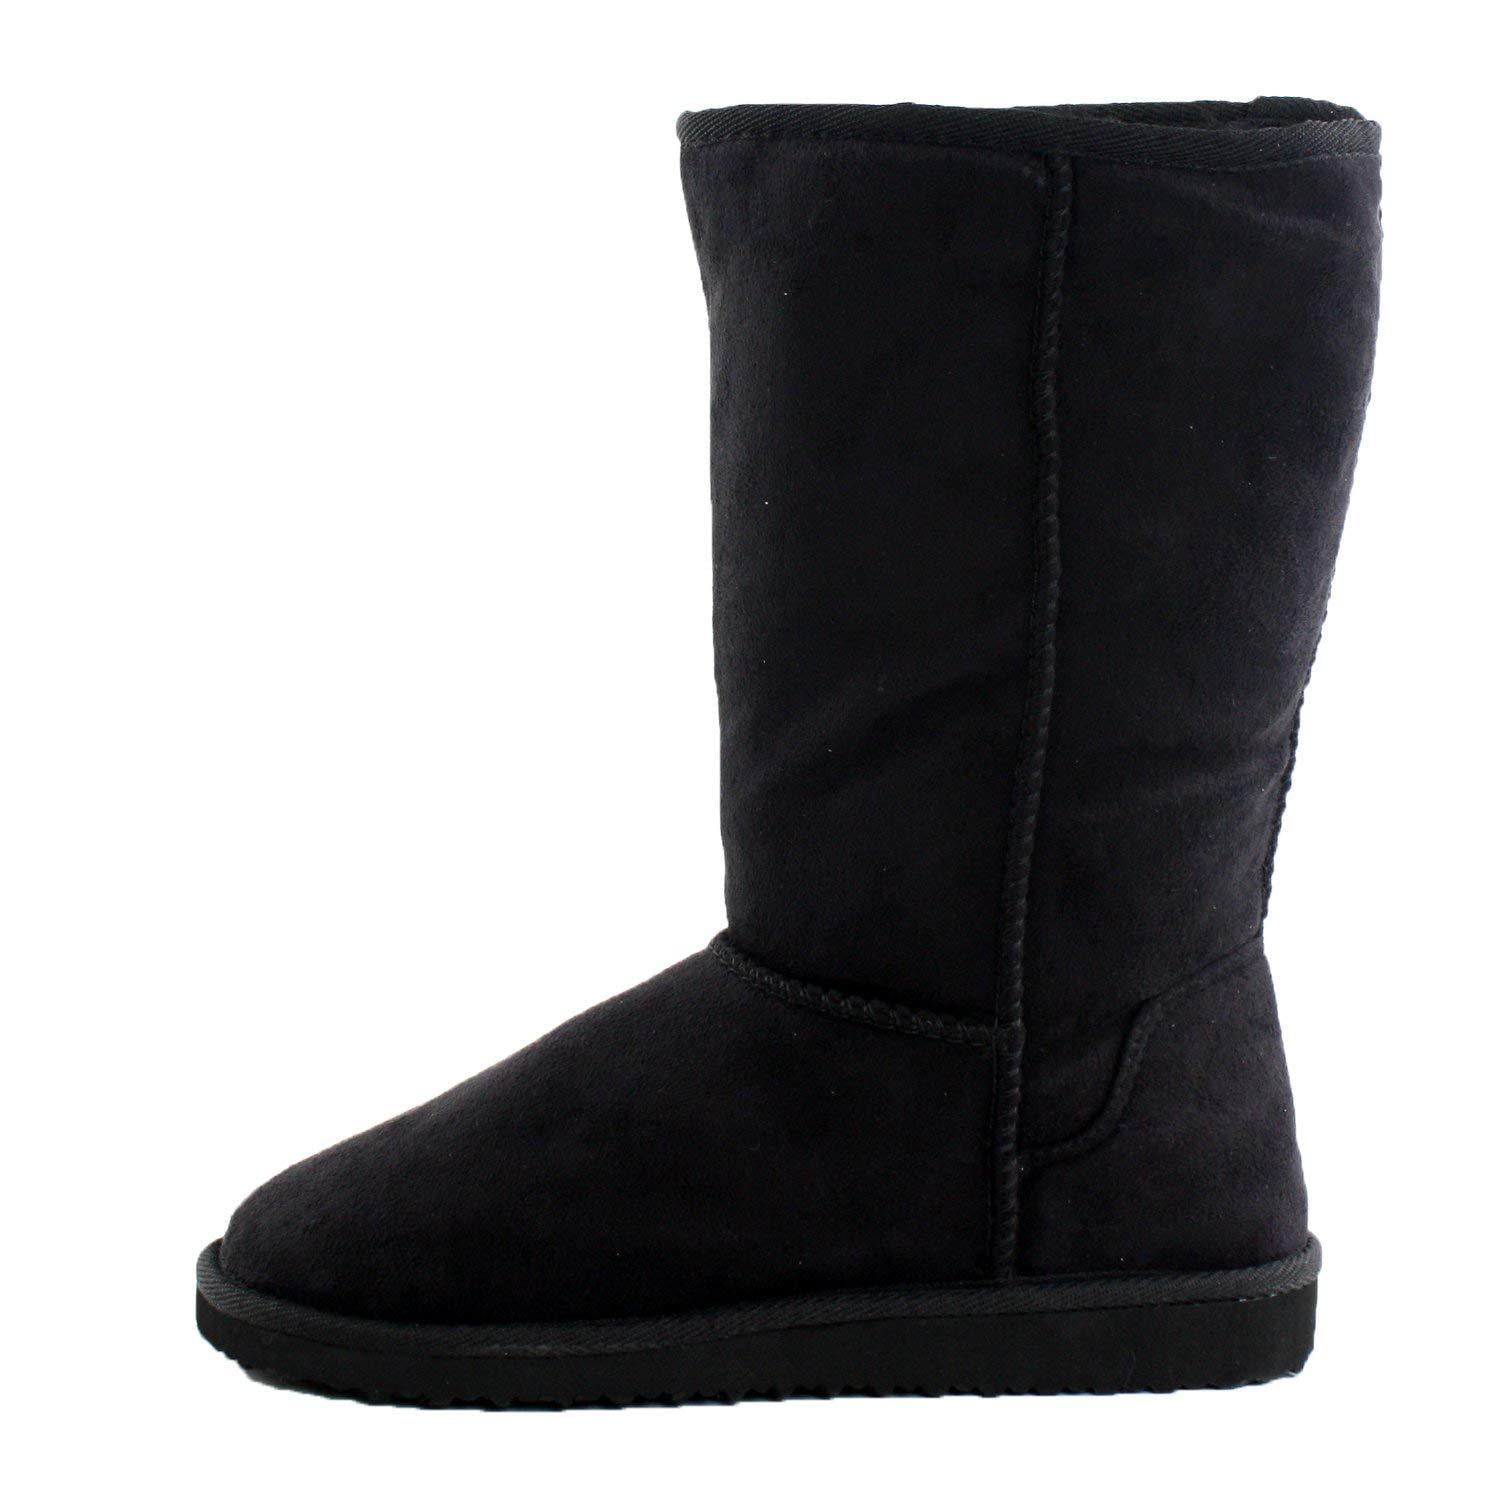 Black Furry Winter Boots Vegan Fleece Women - 5.5 - Walmart.com